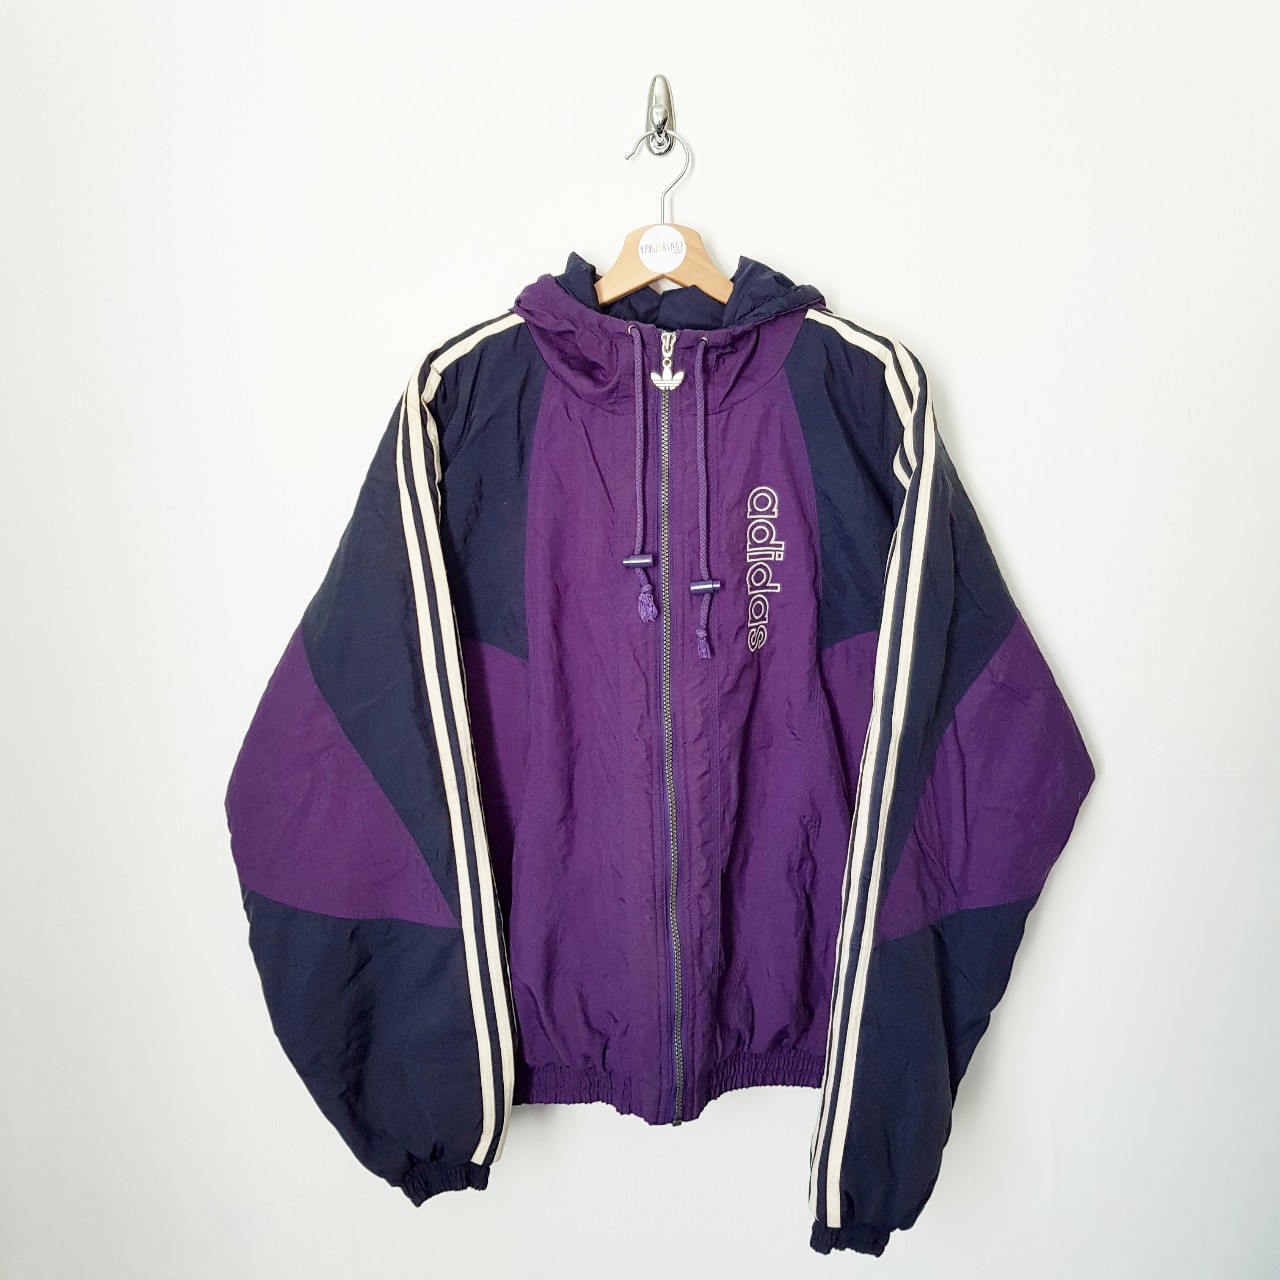 Vintage Louis Tomlinson Windbreaker Jacket - Purple Color